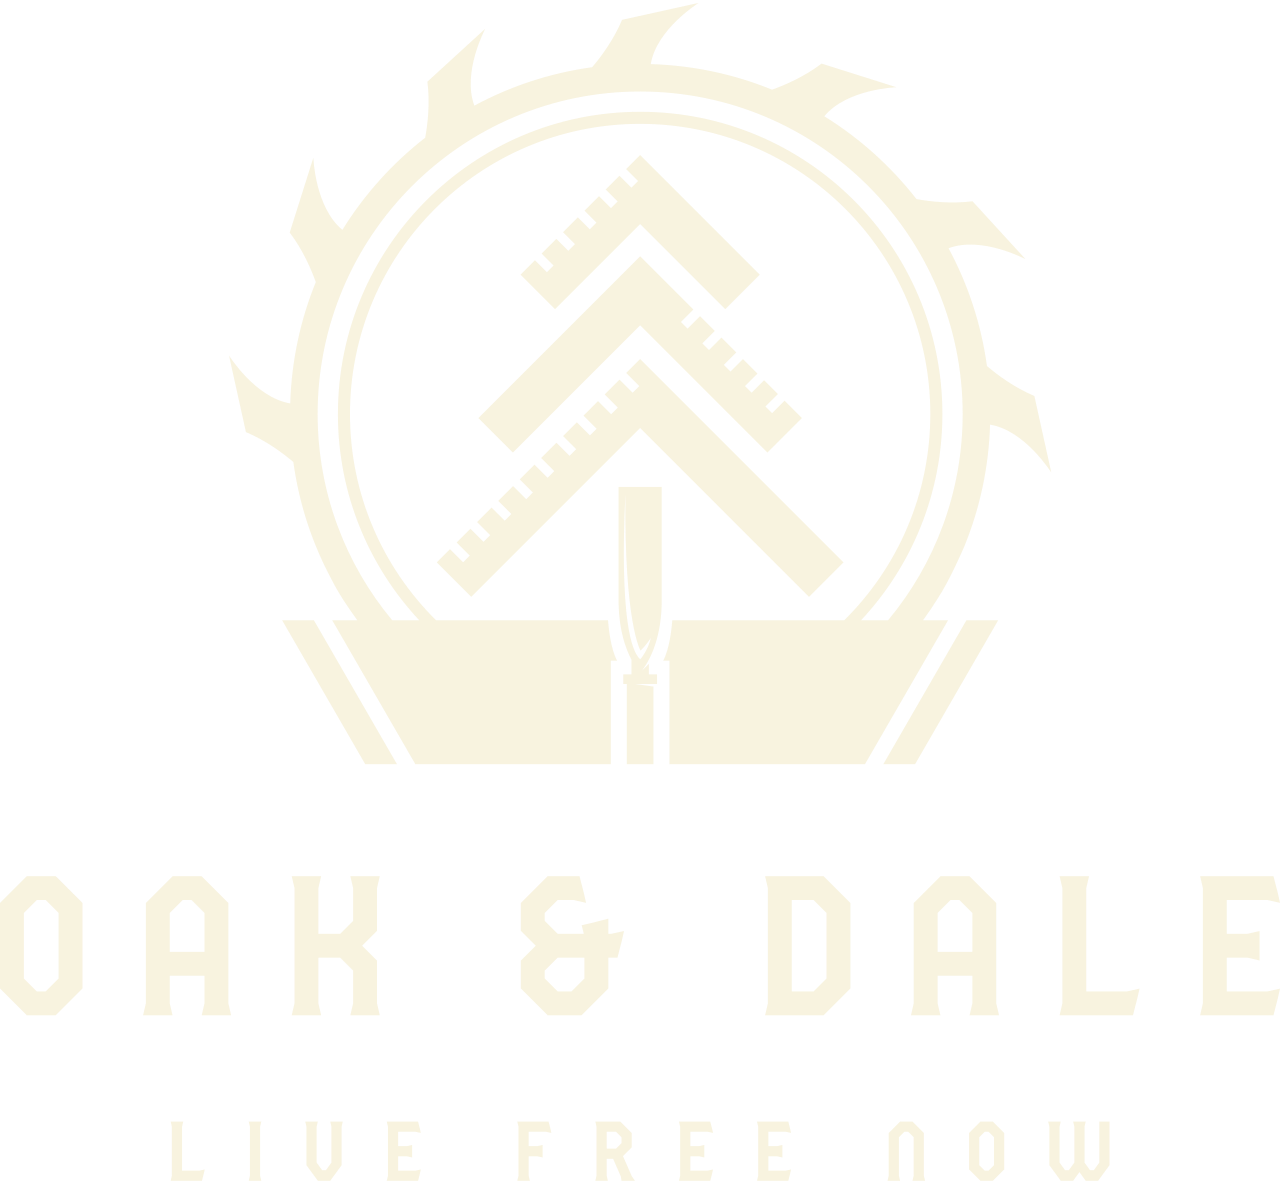 Oak & Dale's web page